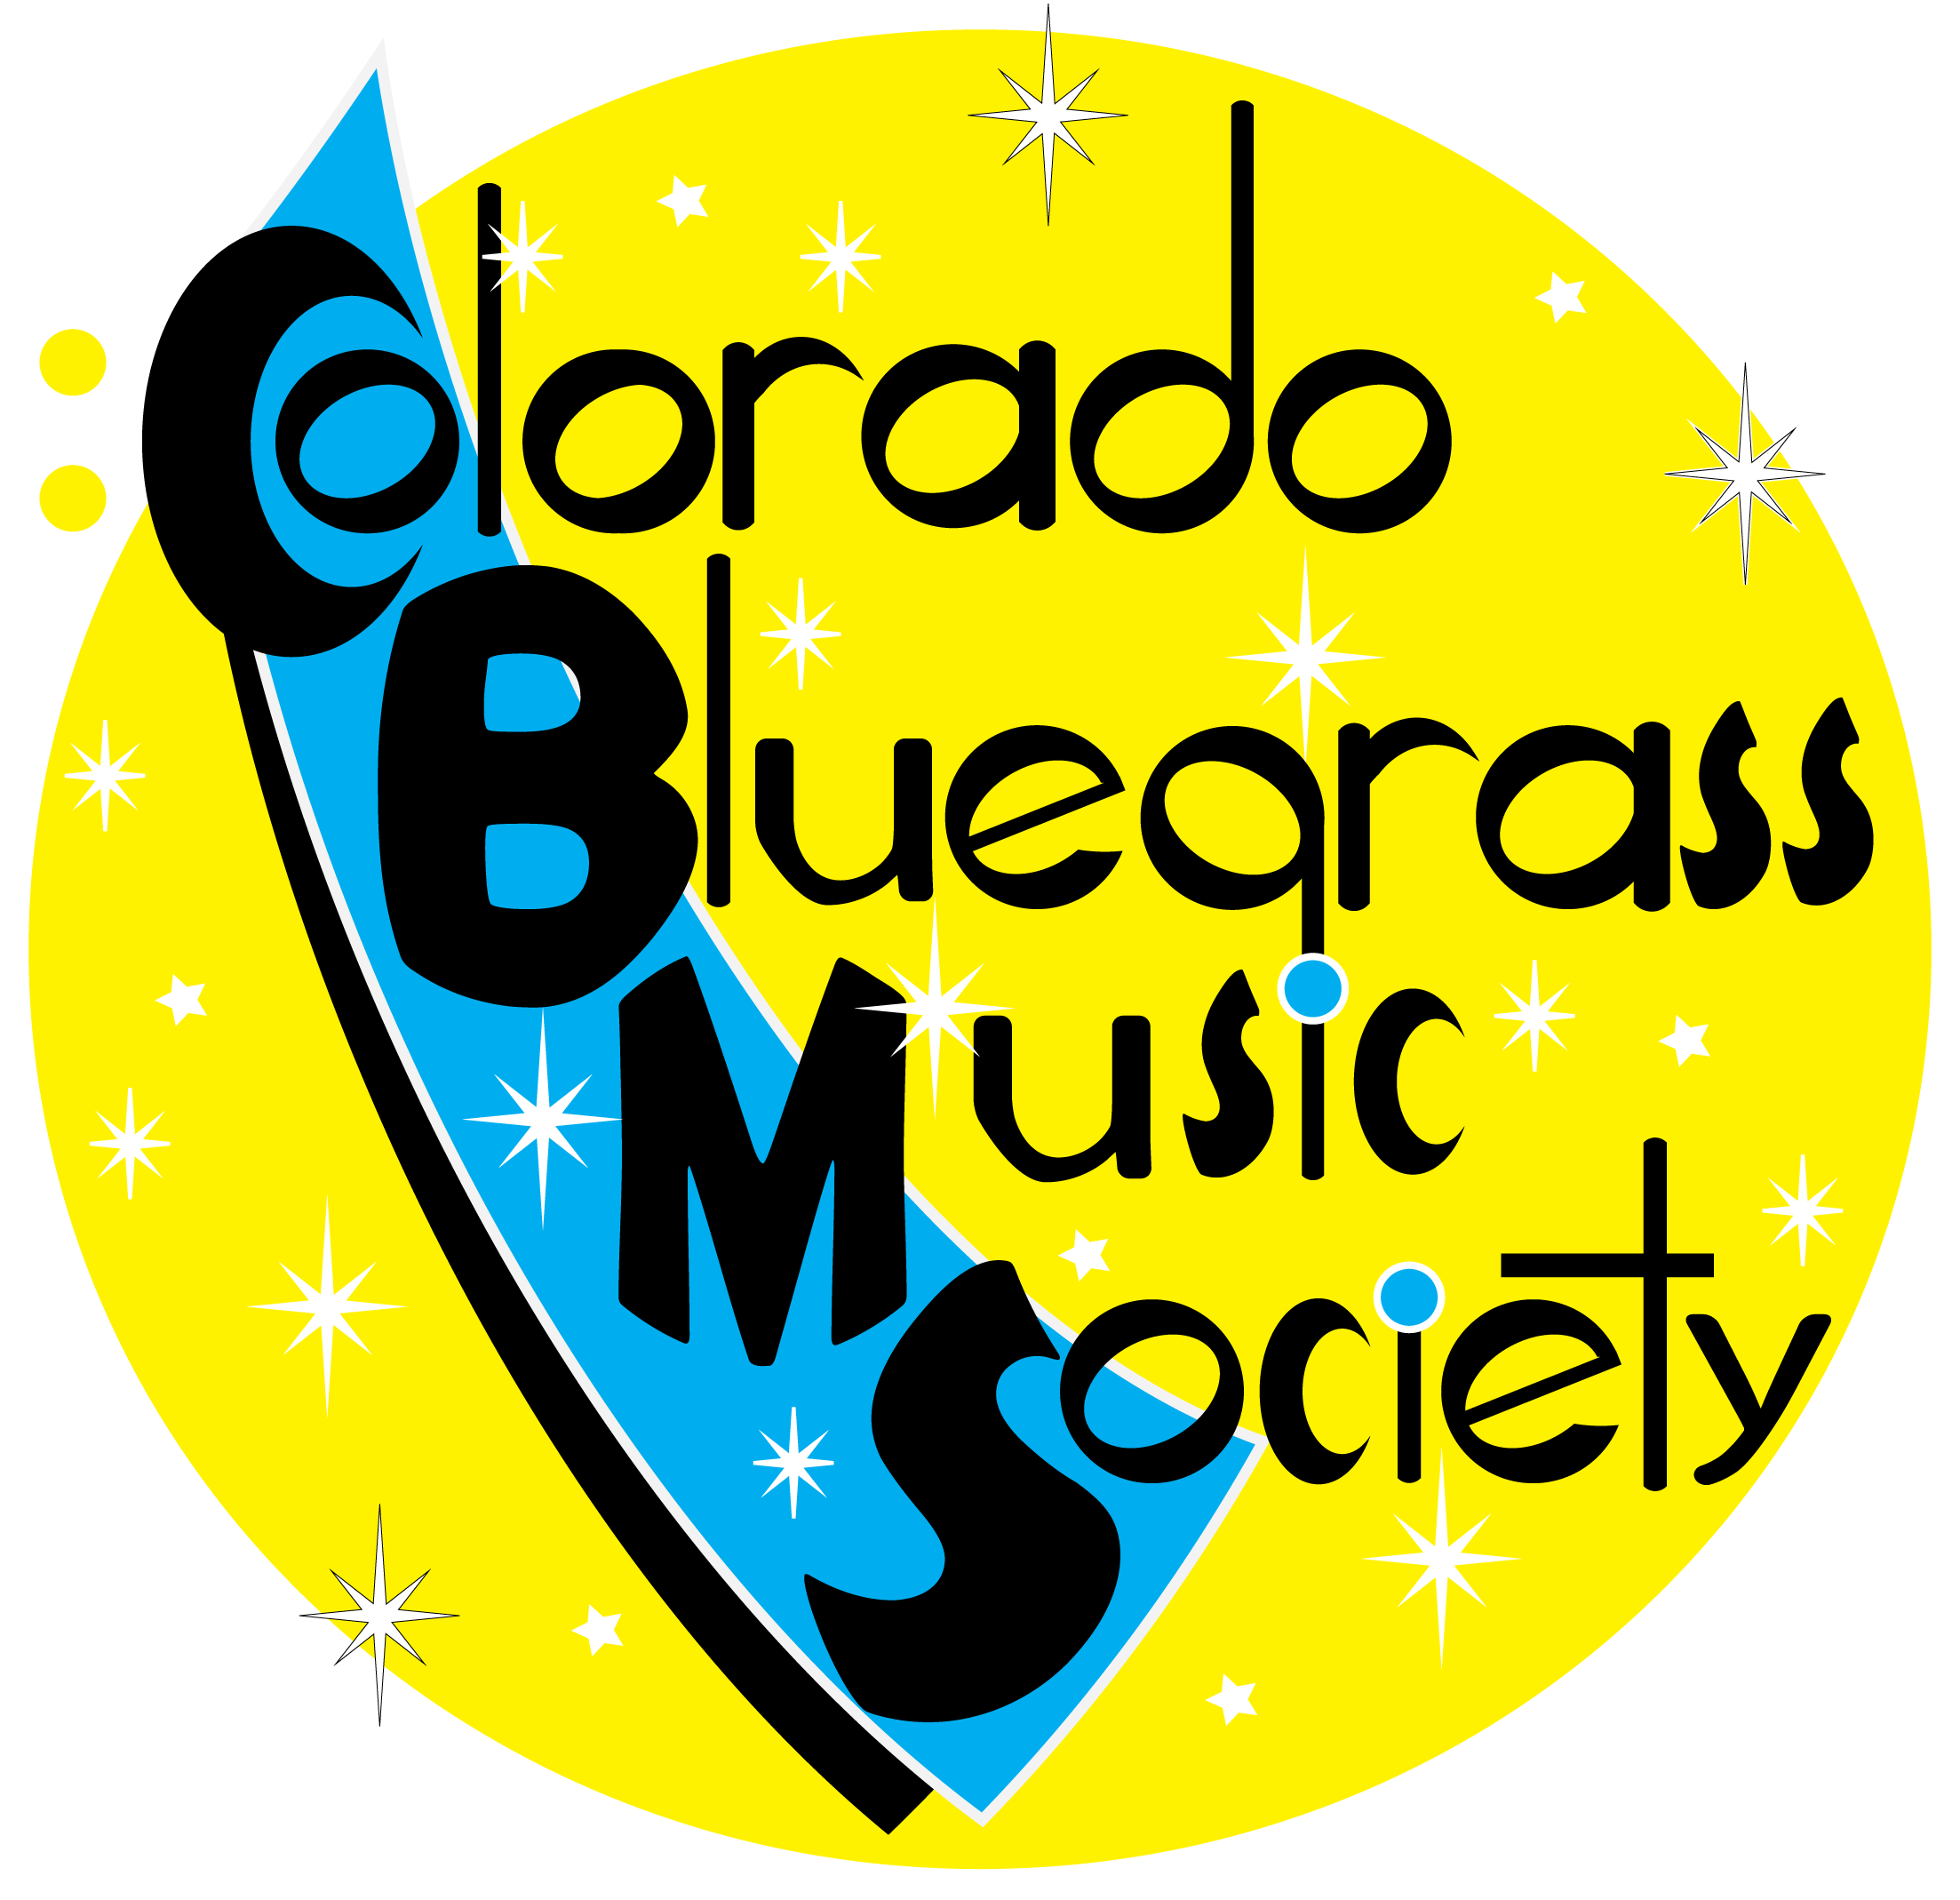 Colorado Bluegrass Music Society